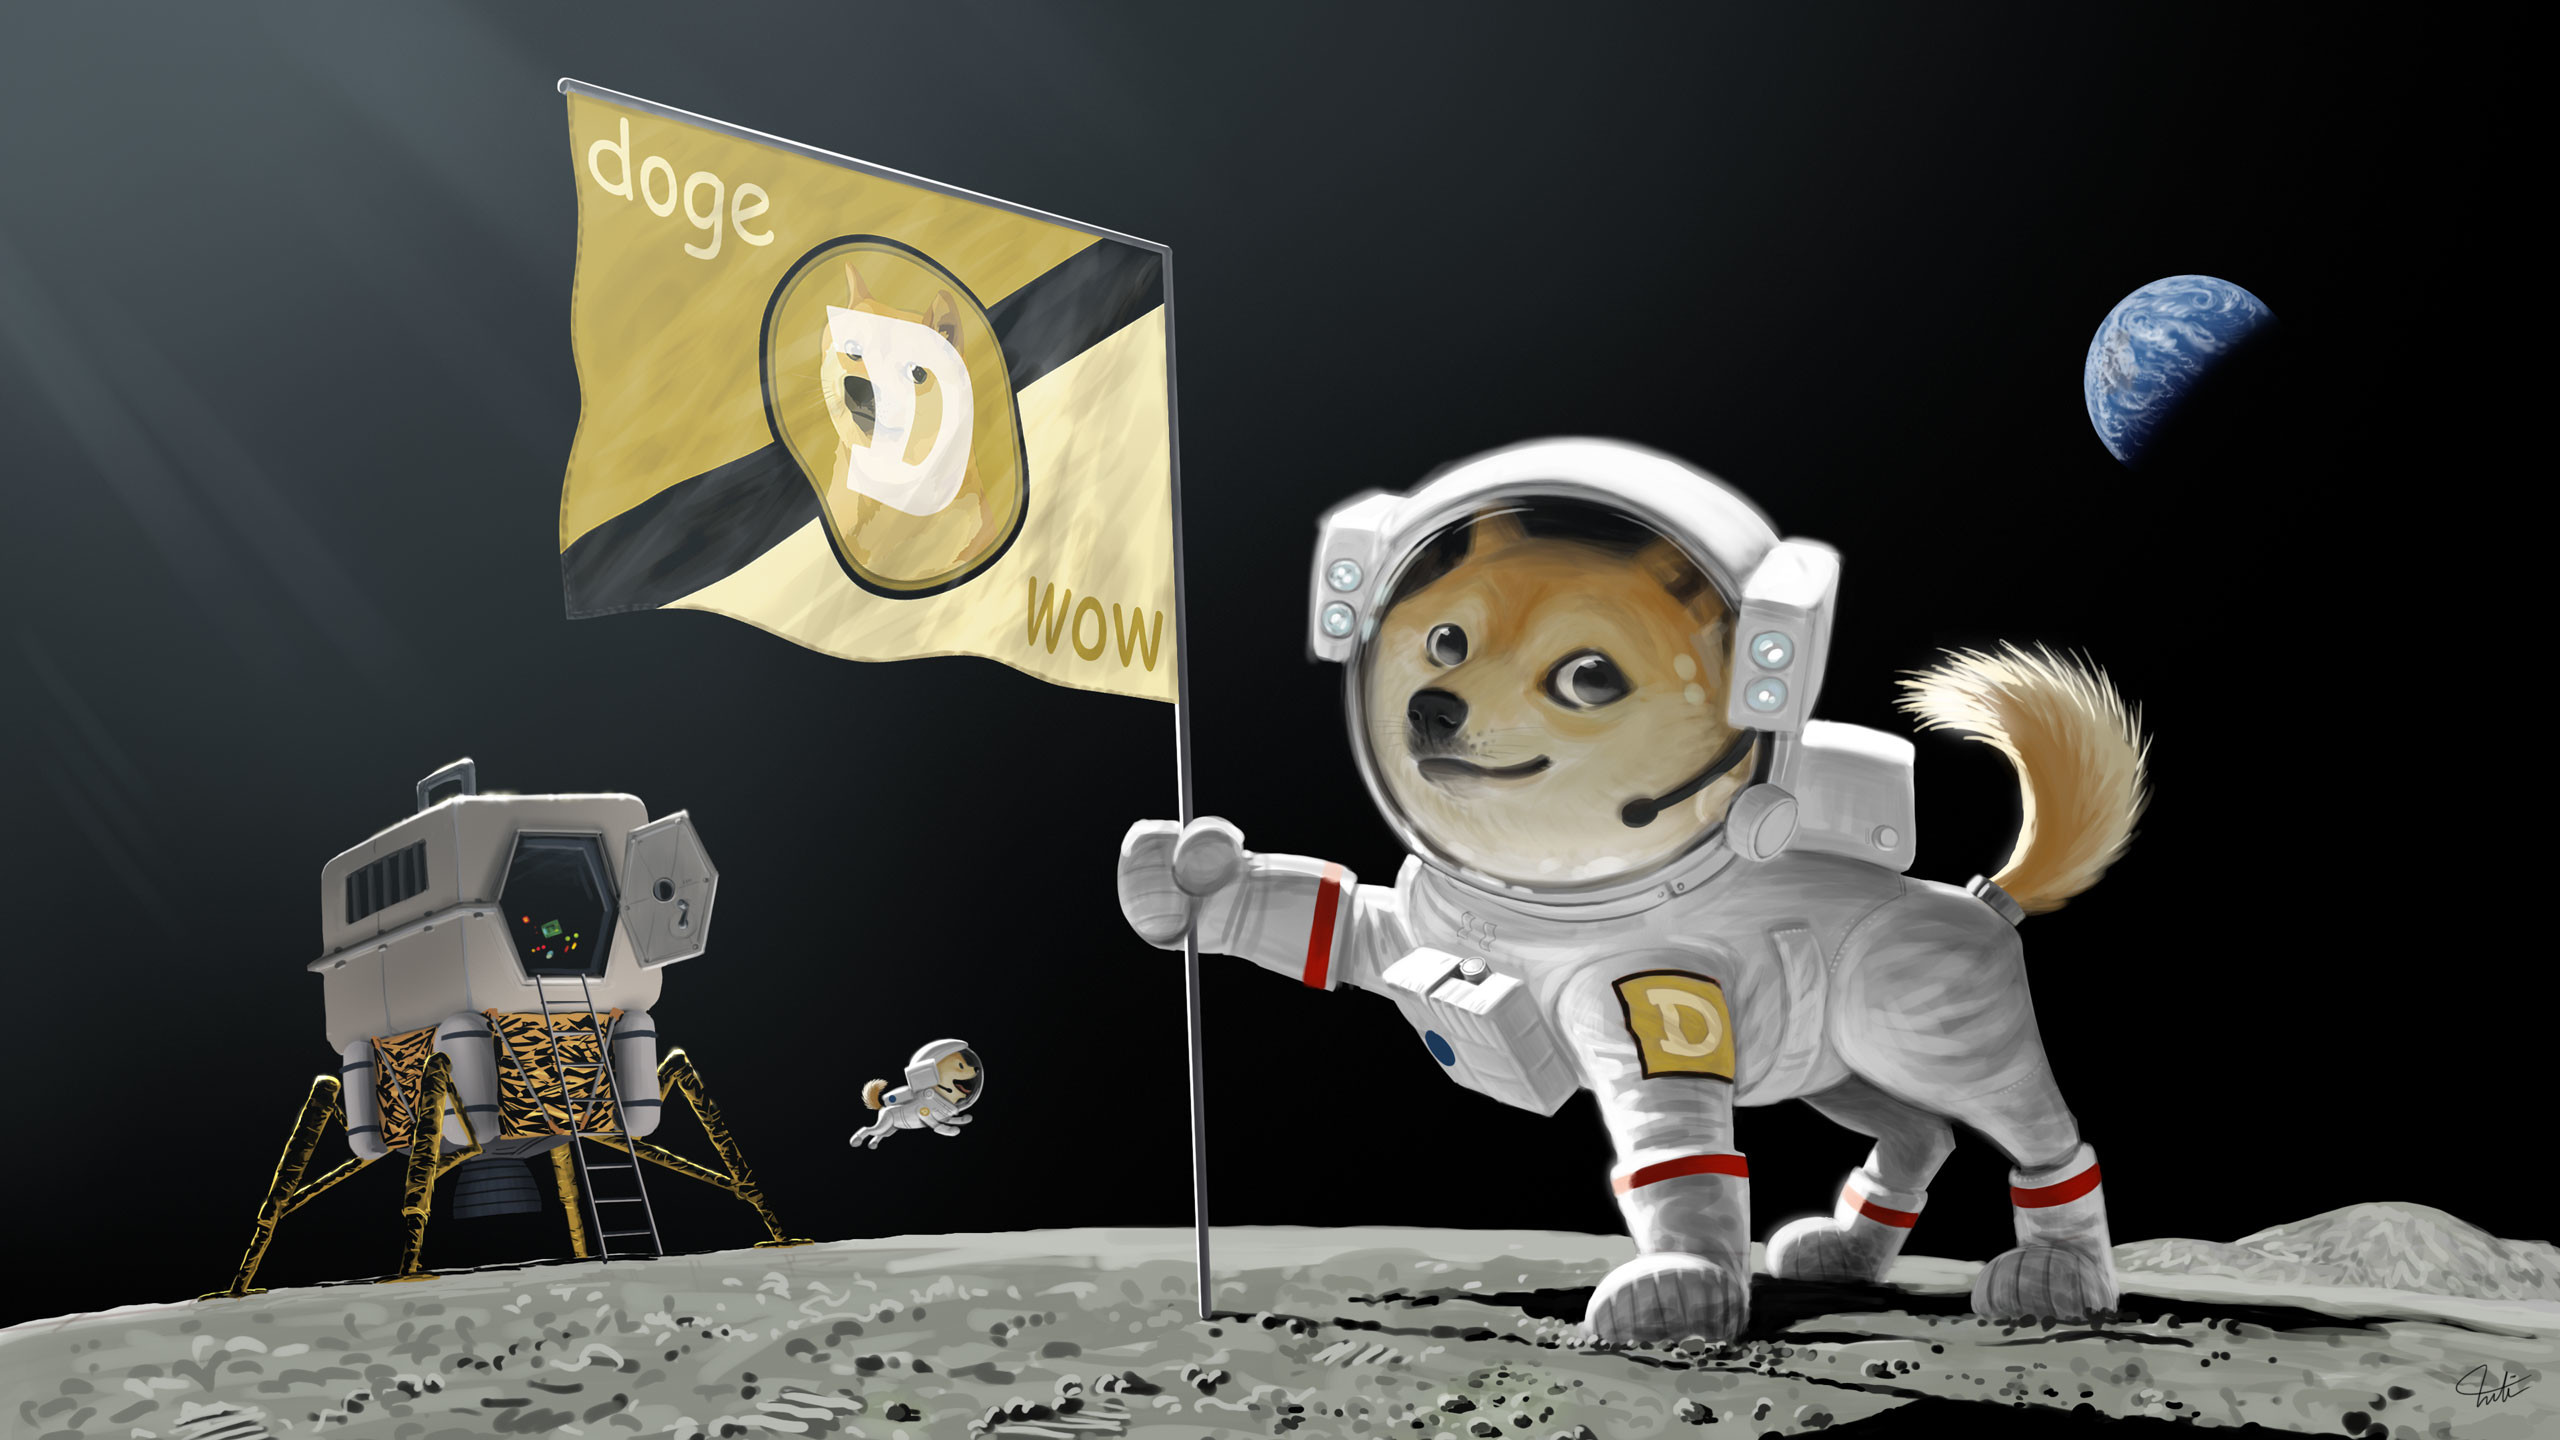 2560x1440 Doge Dog Astronaut Meme Moon Landing Earth Planet Flag wallpaper |   | 218921 | WallpaperUP